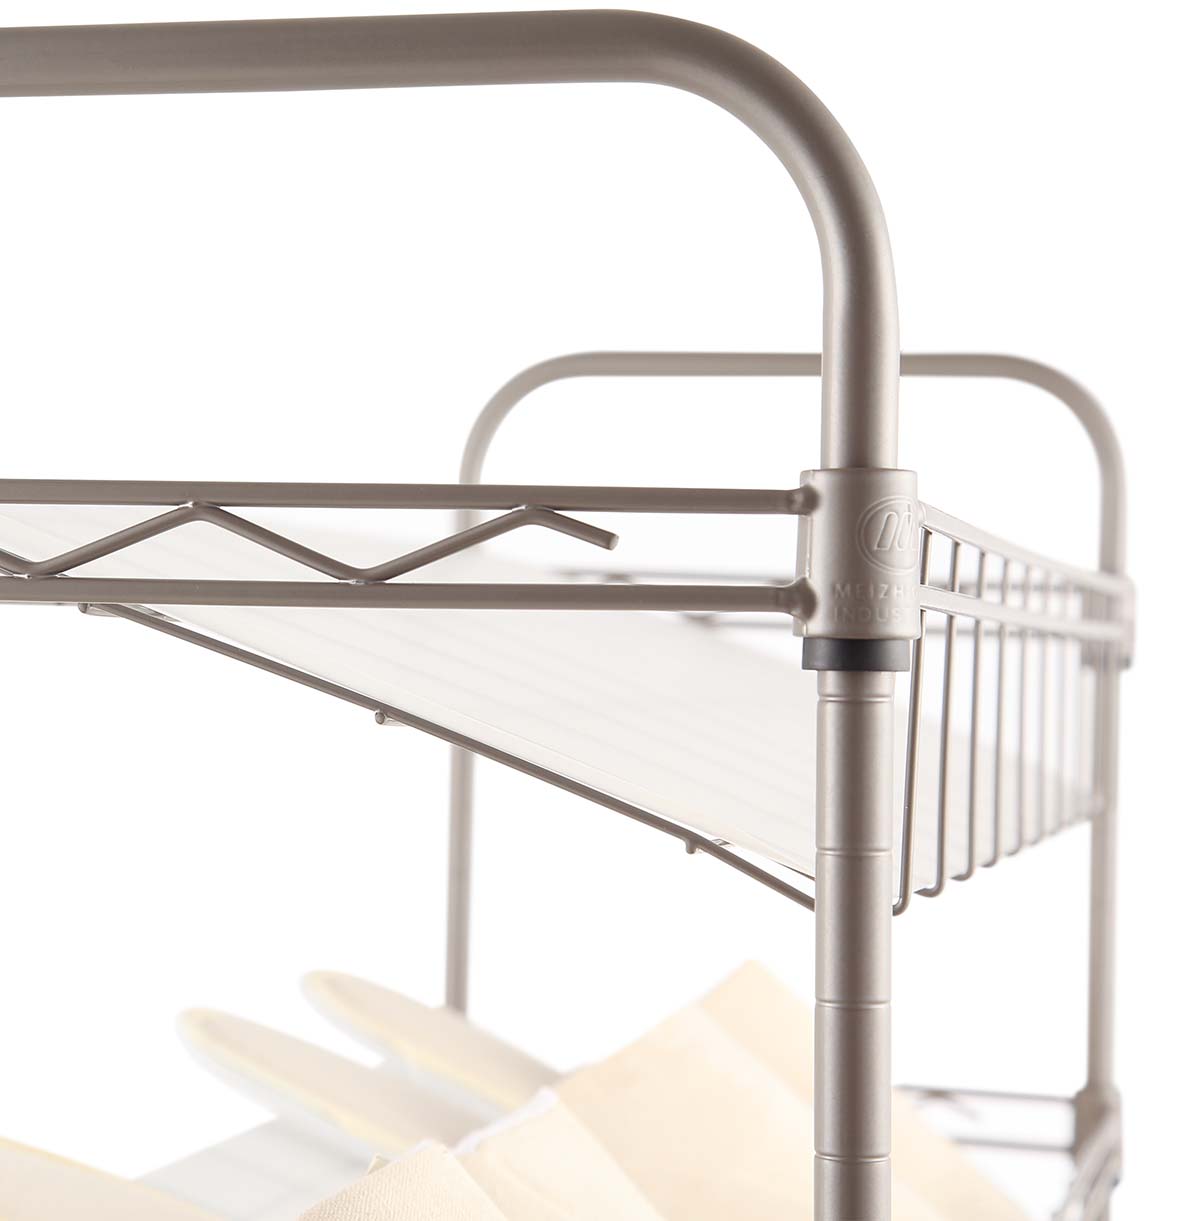 stainless steel wire shelf cart